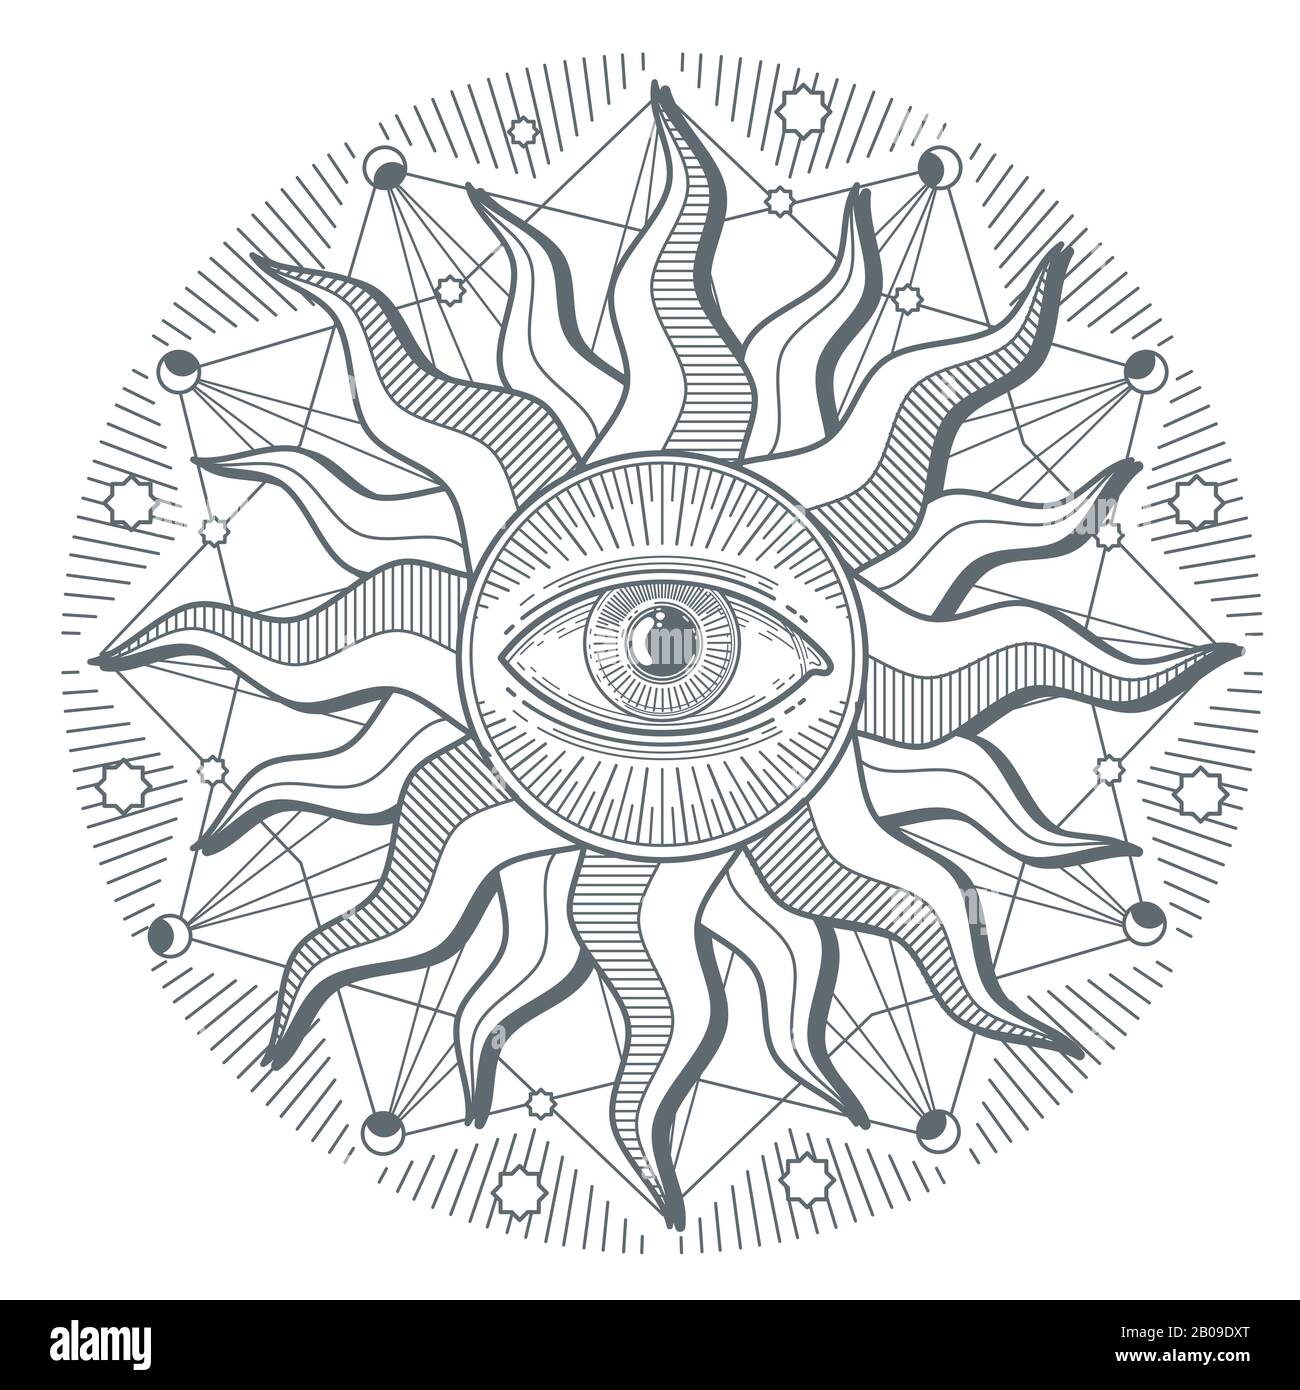 All seeing eye illuminati new world order vector freemasonry sign. Illustration of illuminati freemasonry symbol Stock Vector